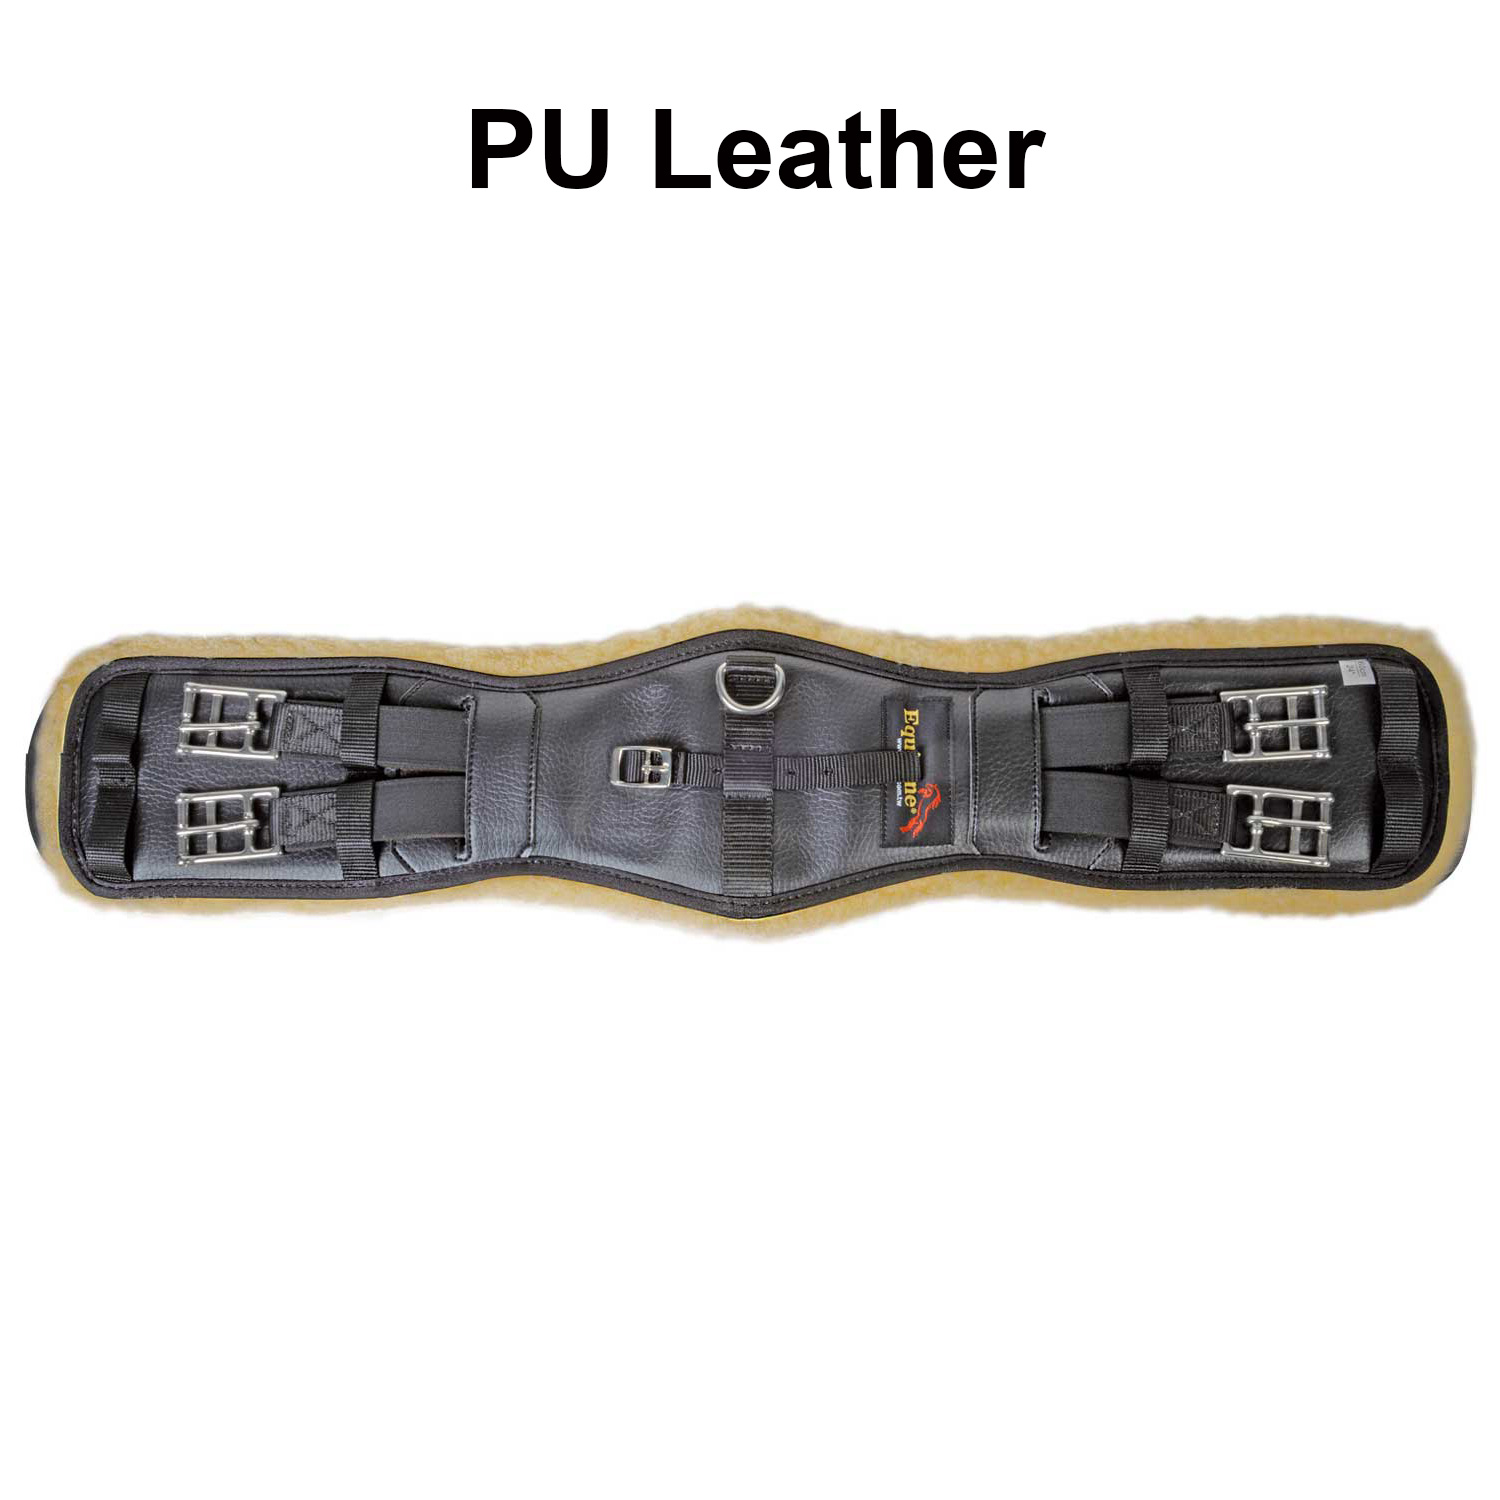 PU Leather English Horse Girth